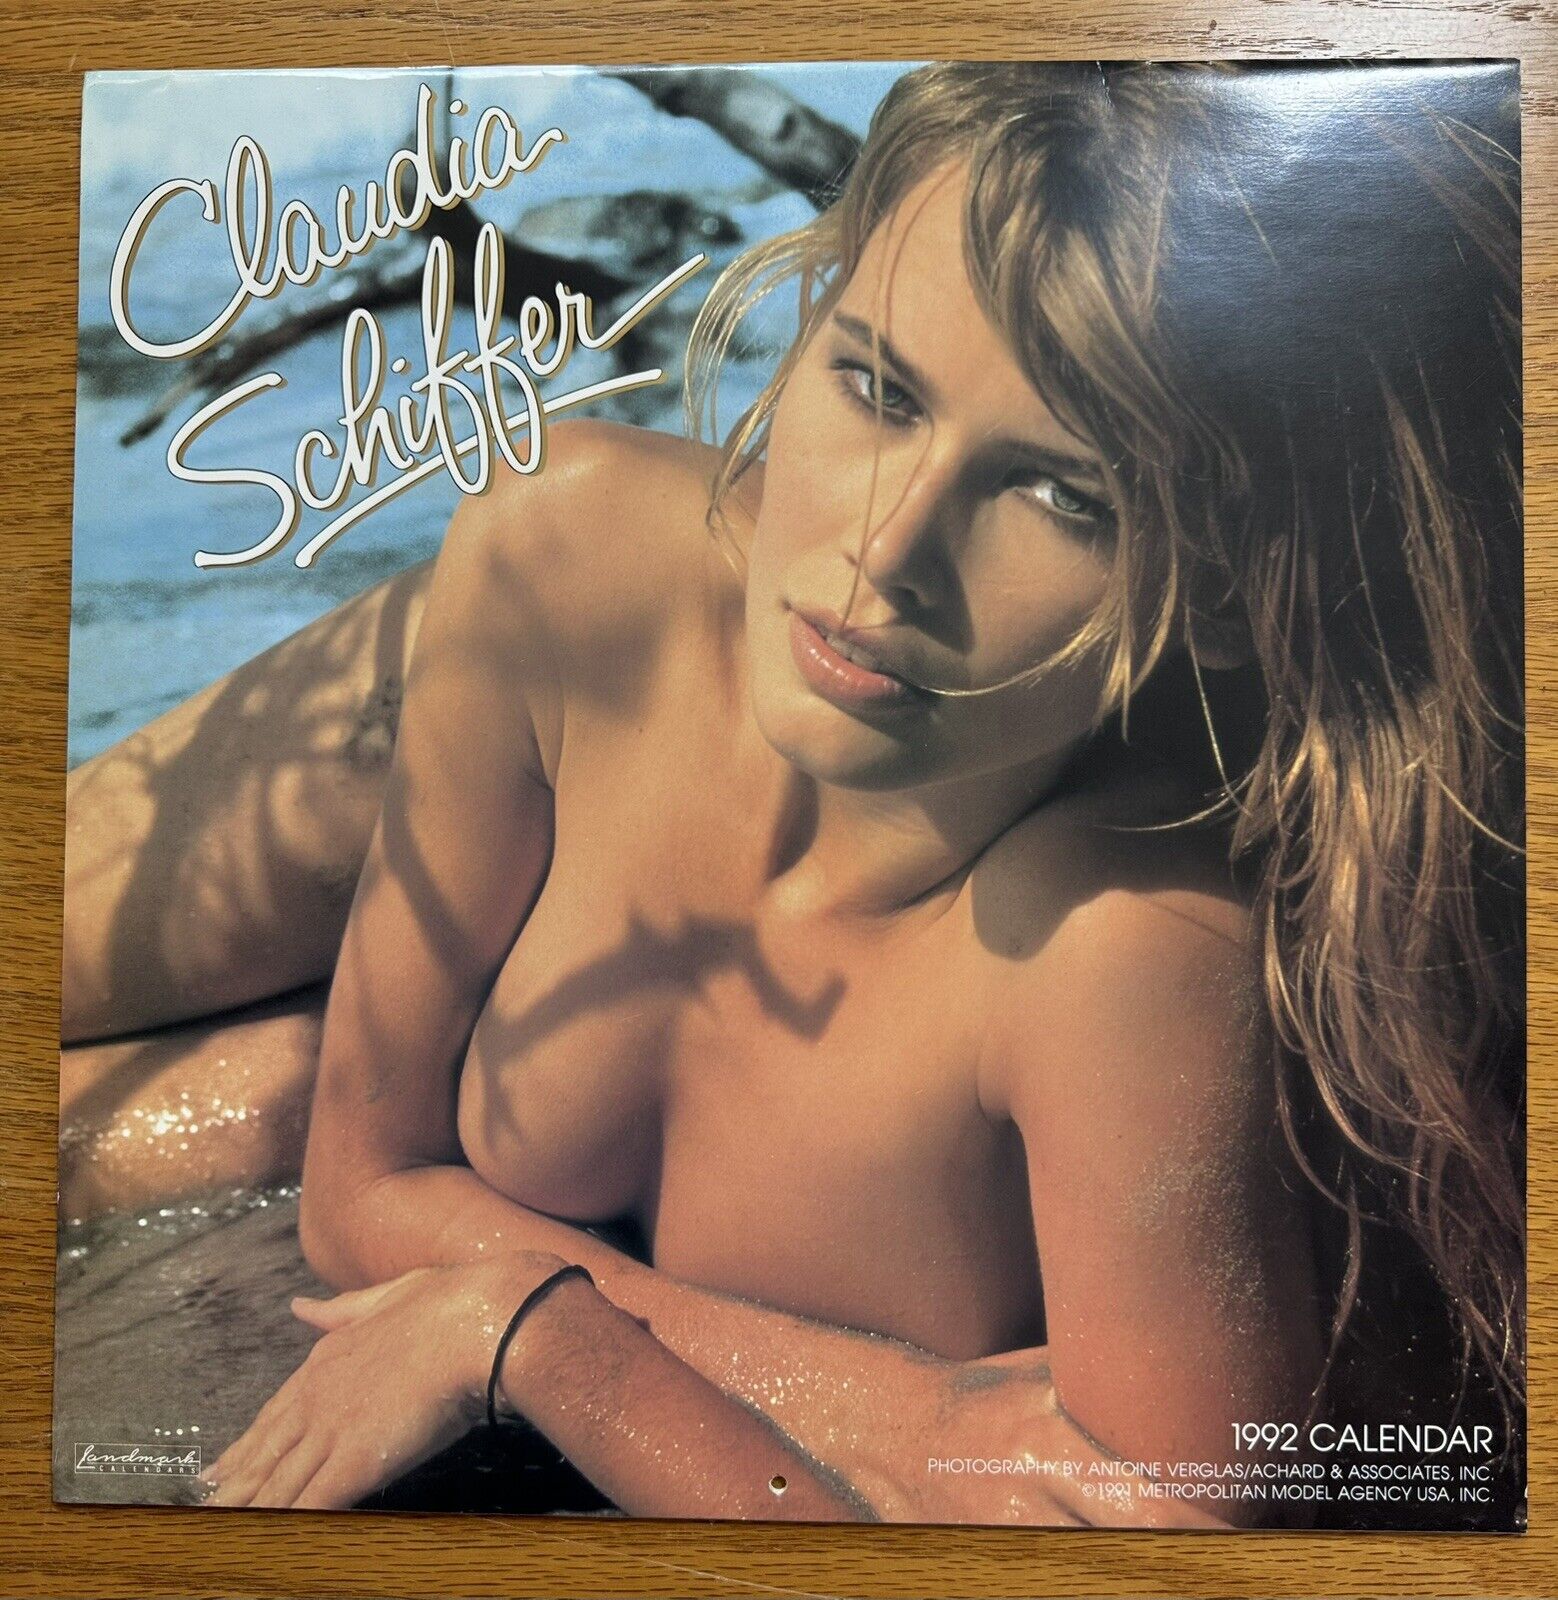 Sexy Claudia Schiffer 12 Month 1992 Swimsuit Calendar,  Iconic 1990s Super Model